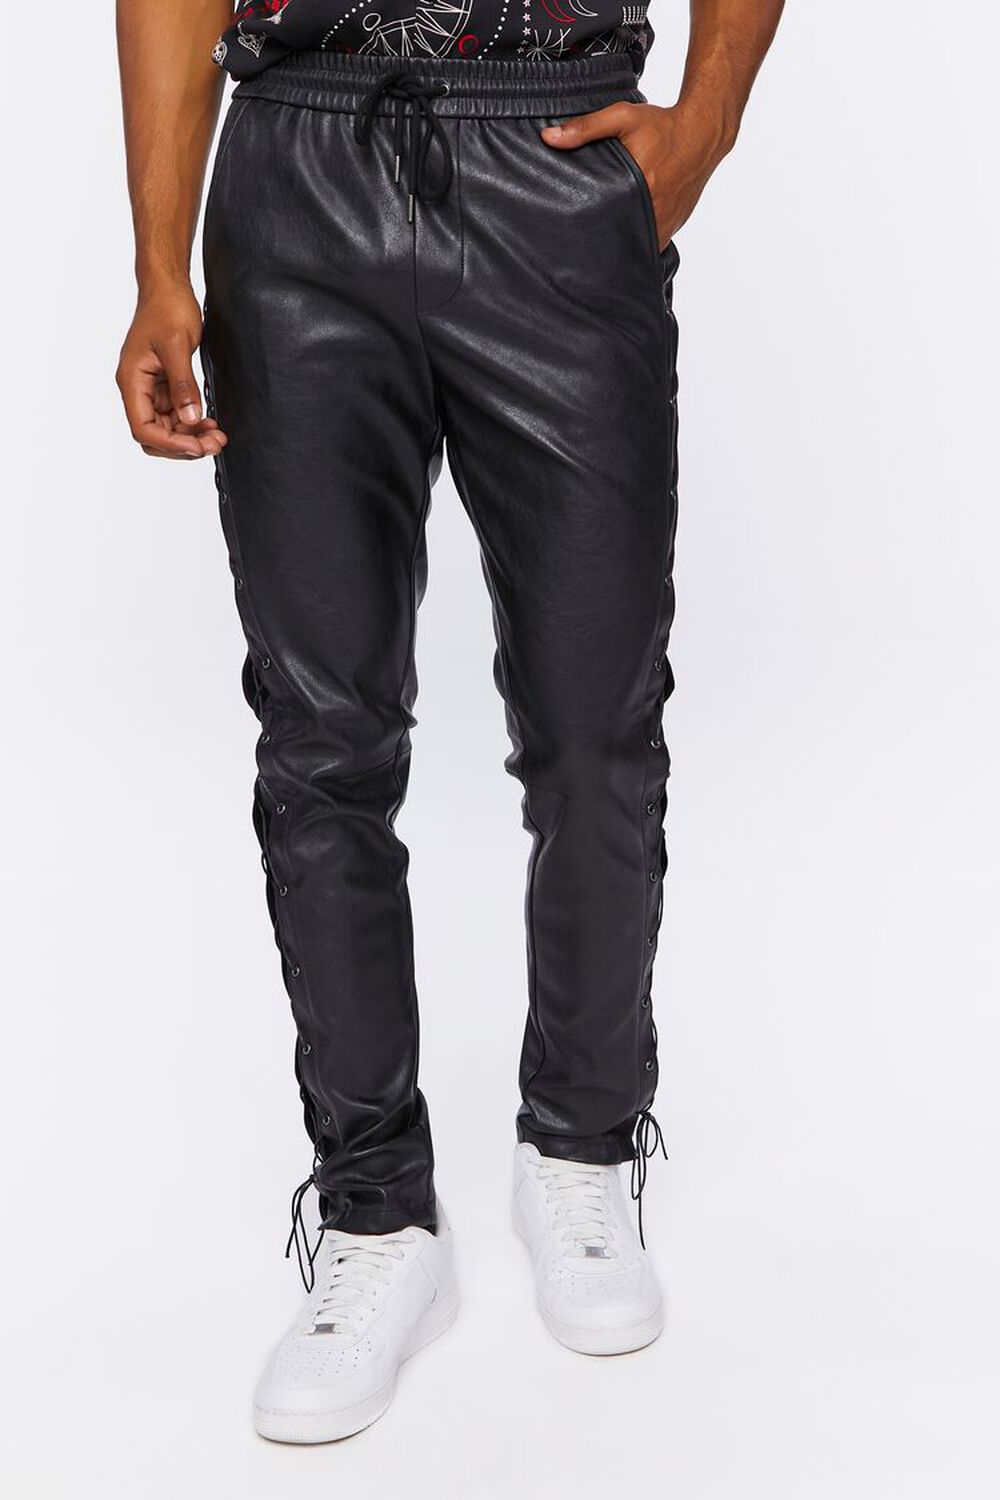 BLACK Faux Leather Side Lace-Up Pants, image 2